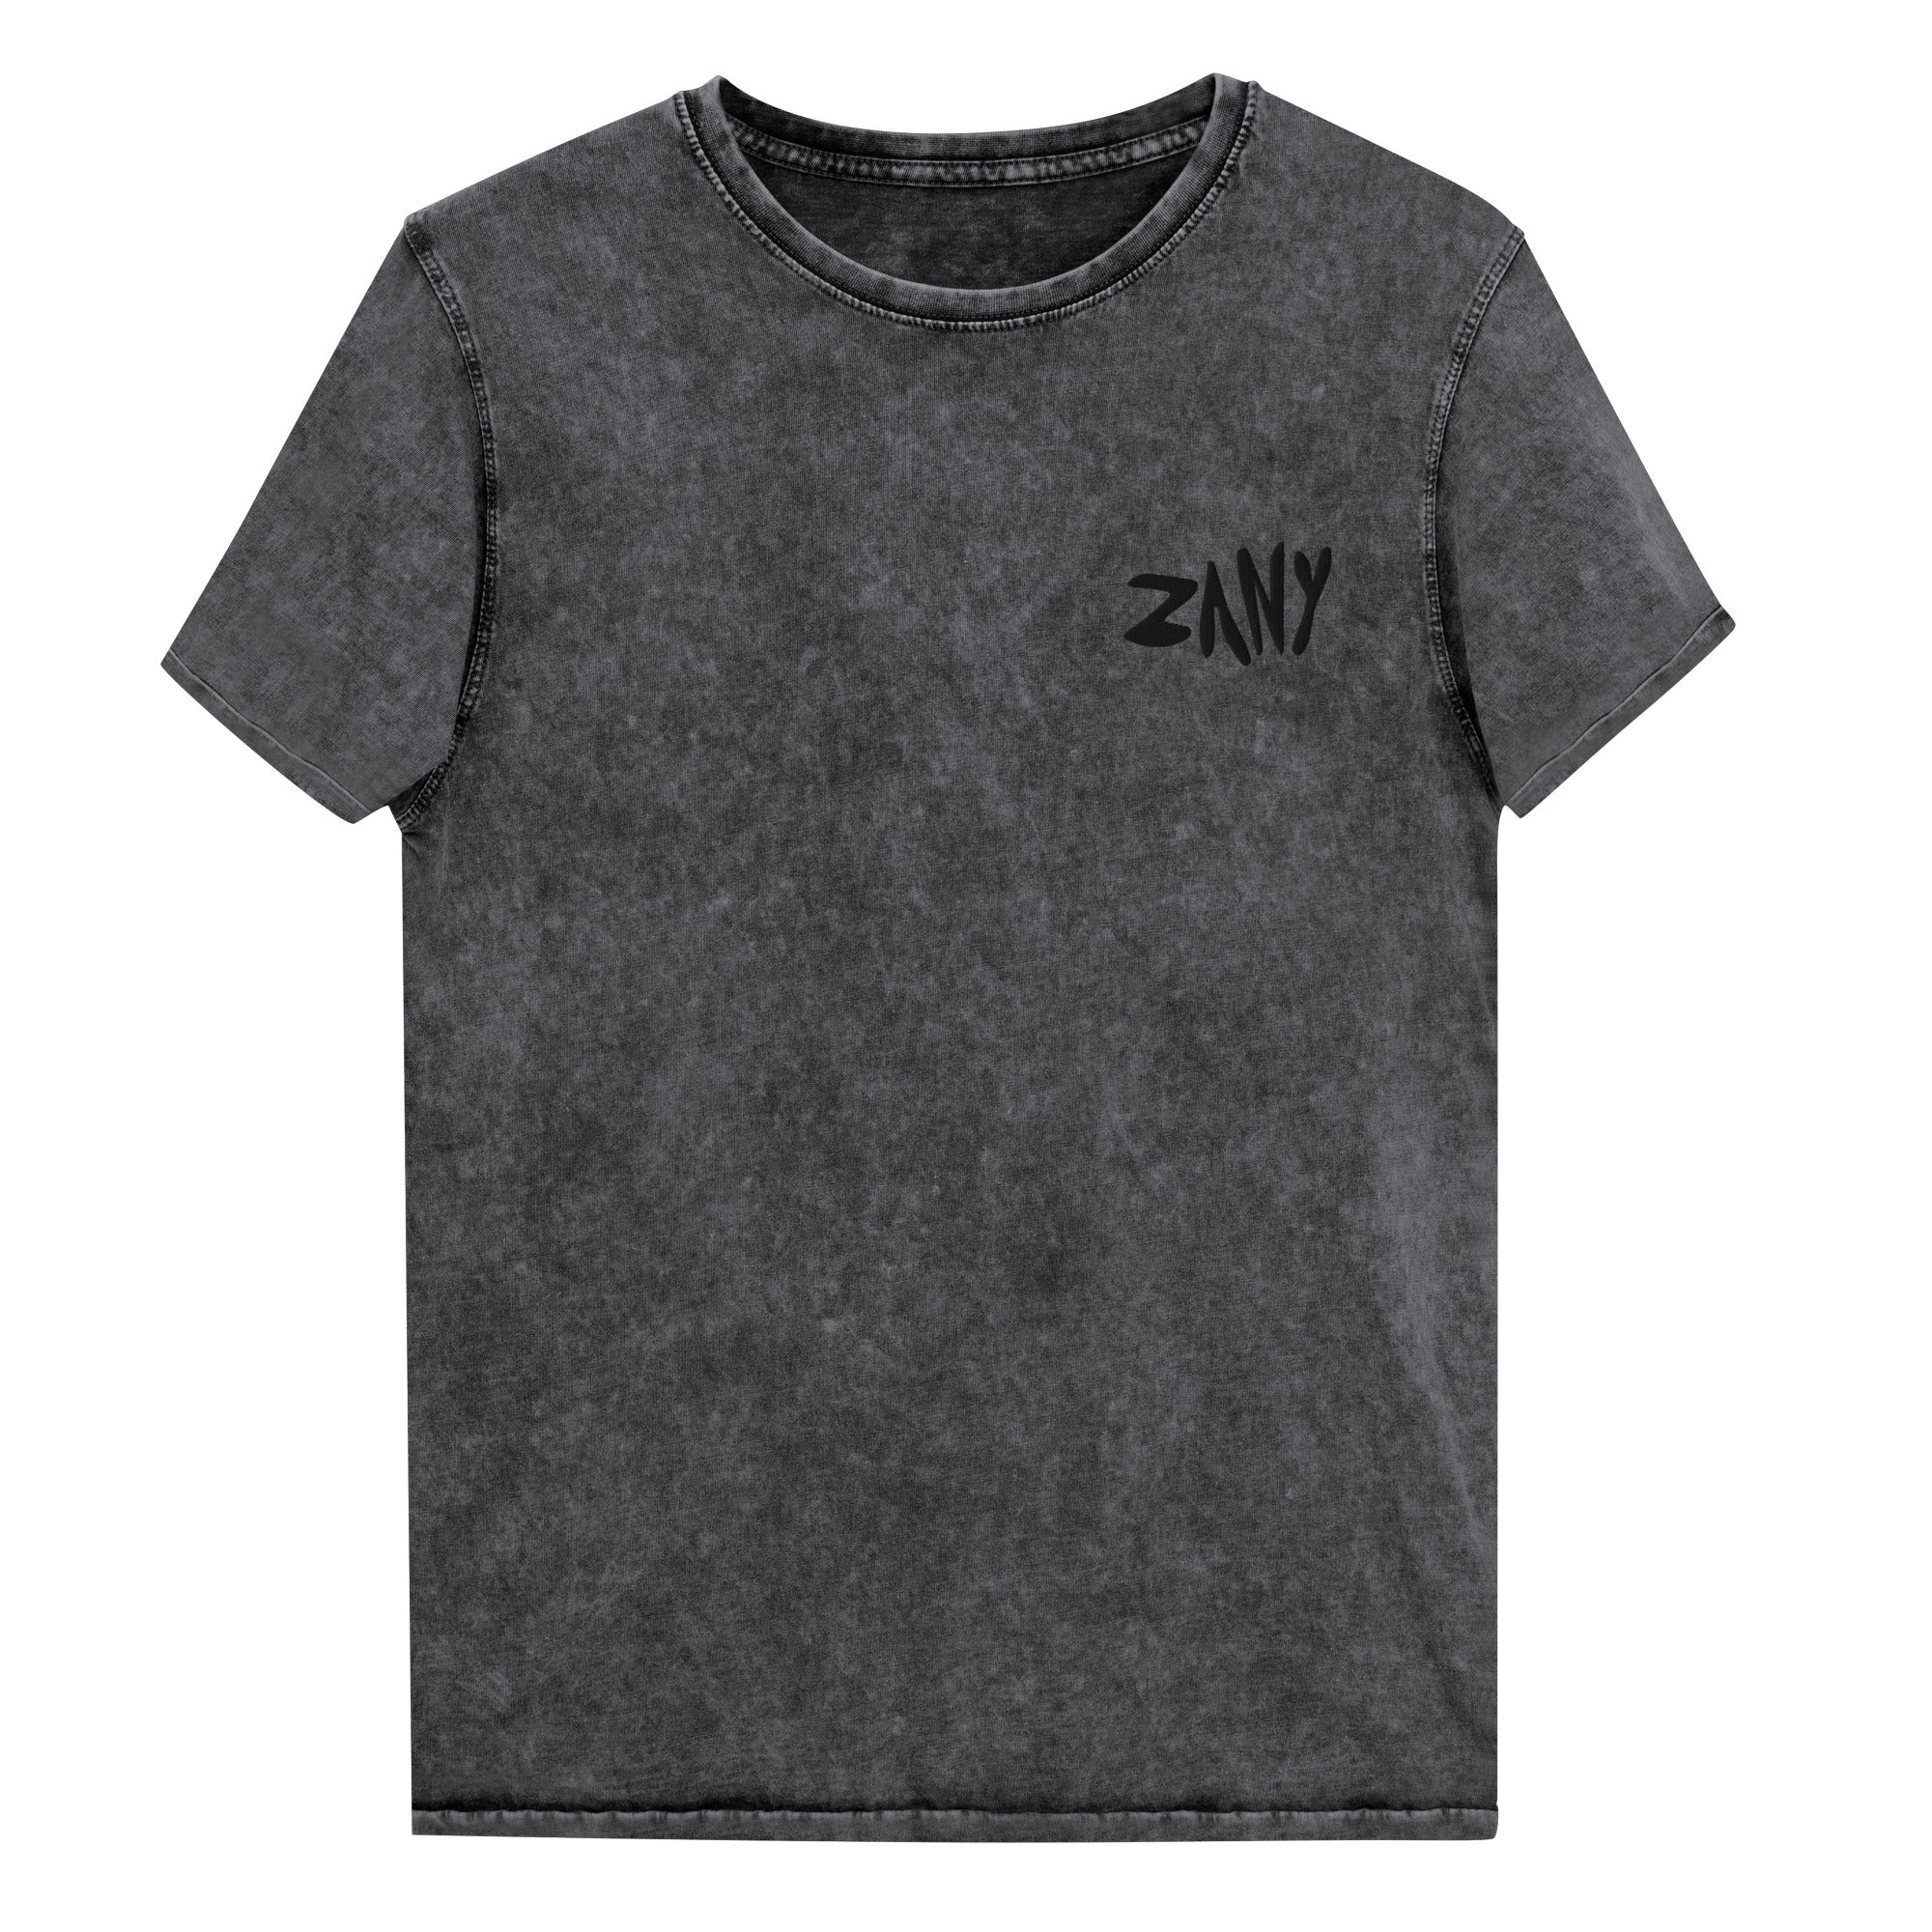 unisex-denim-t-shirt-black-front-646b87a1dac5c.jpg